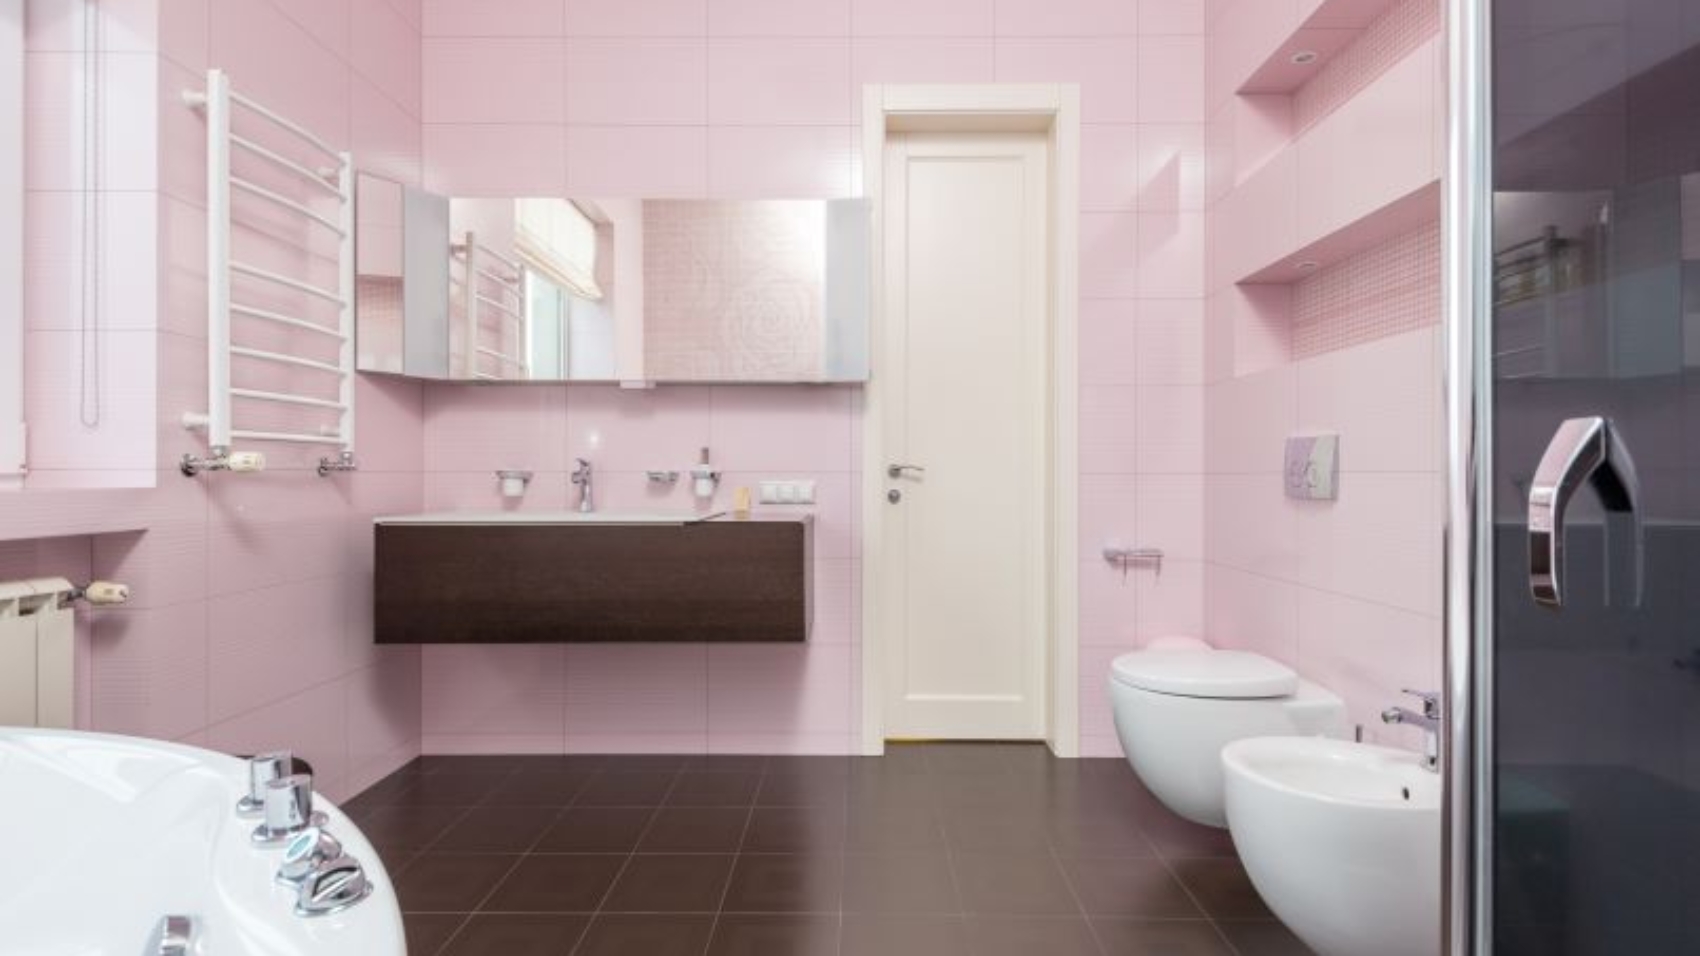 Pink Bathroom Tiles